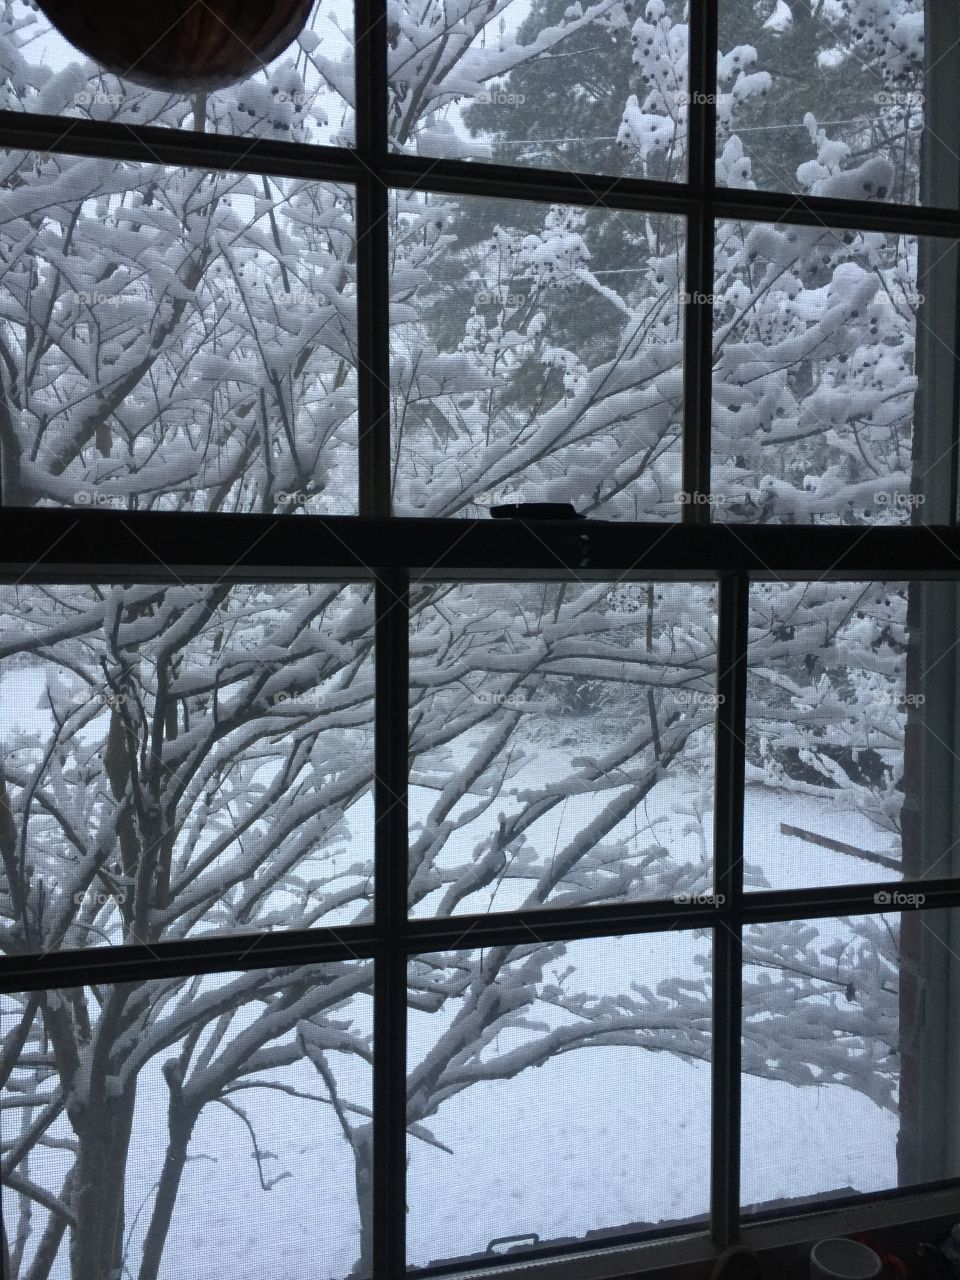 Snowy scene through window